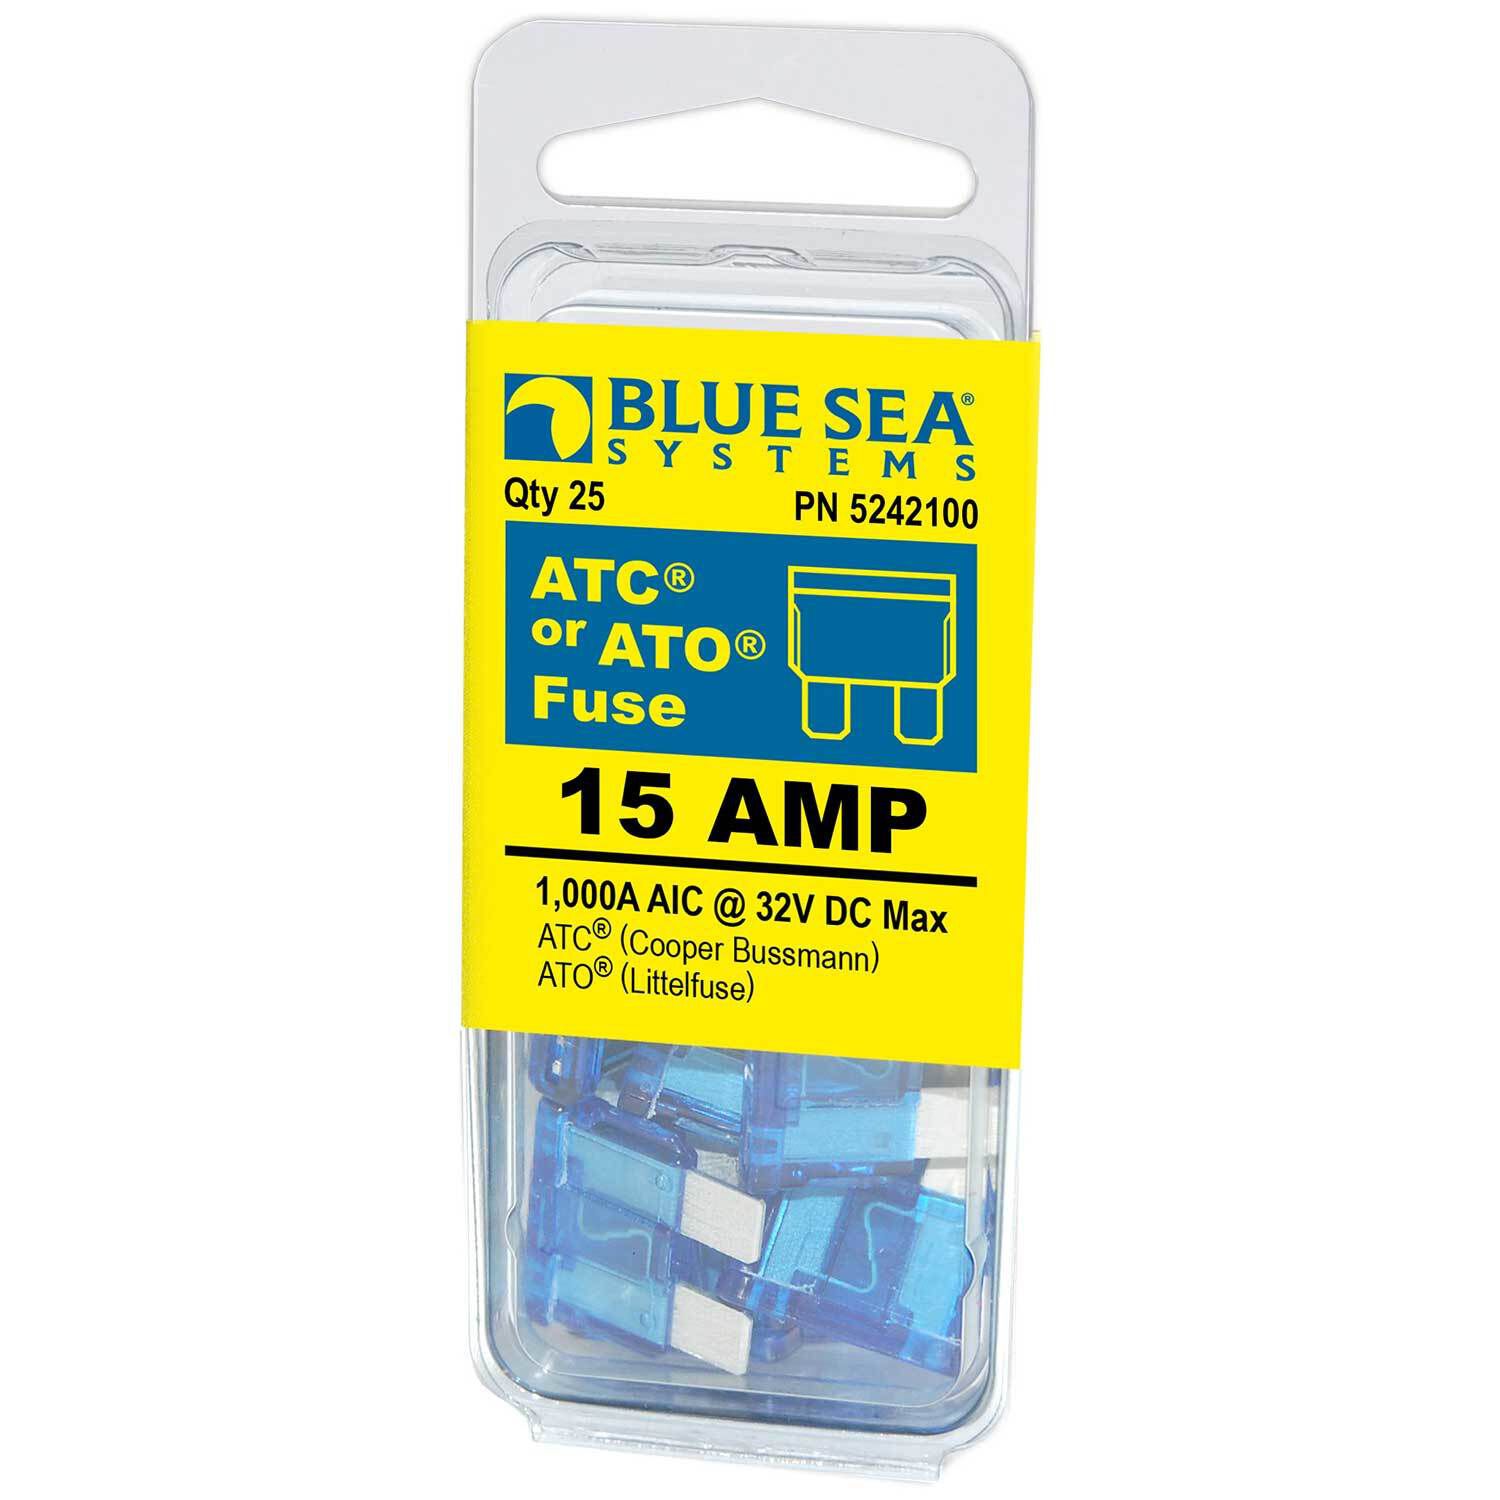 25 x 15 Amp Blue Standard Blade Fuses Amps 15A Fuse Car Van Auto Marine ATO 